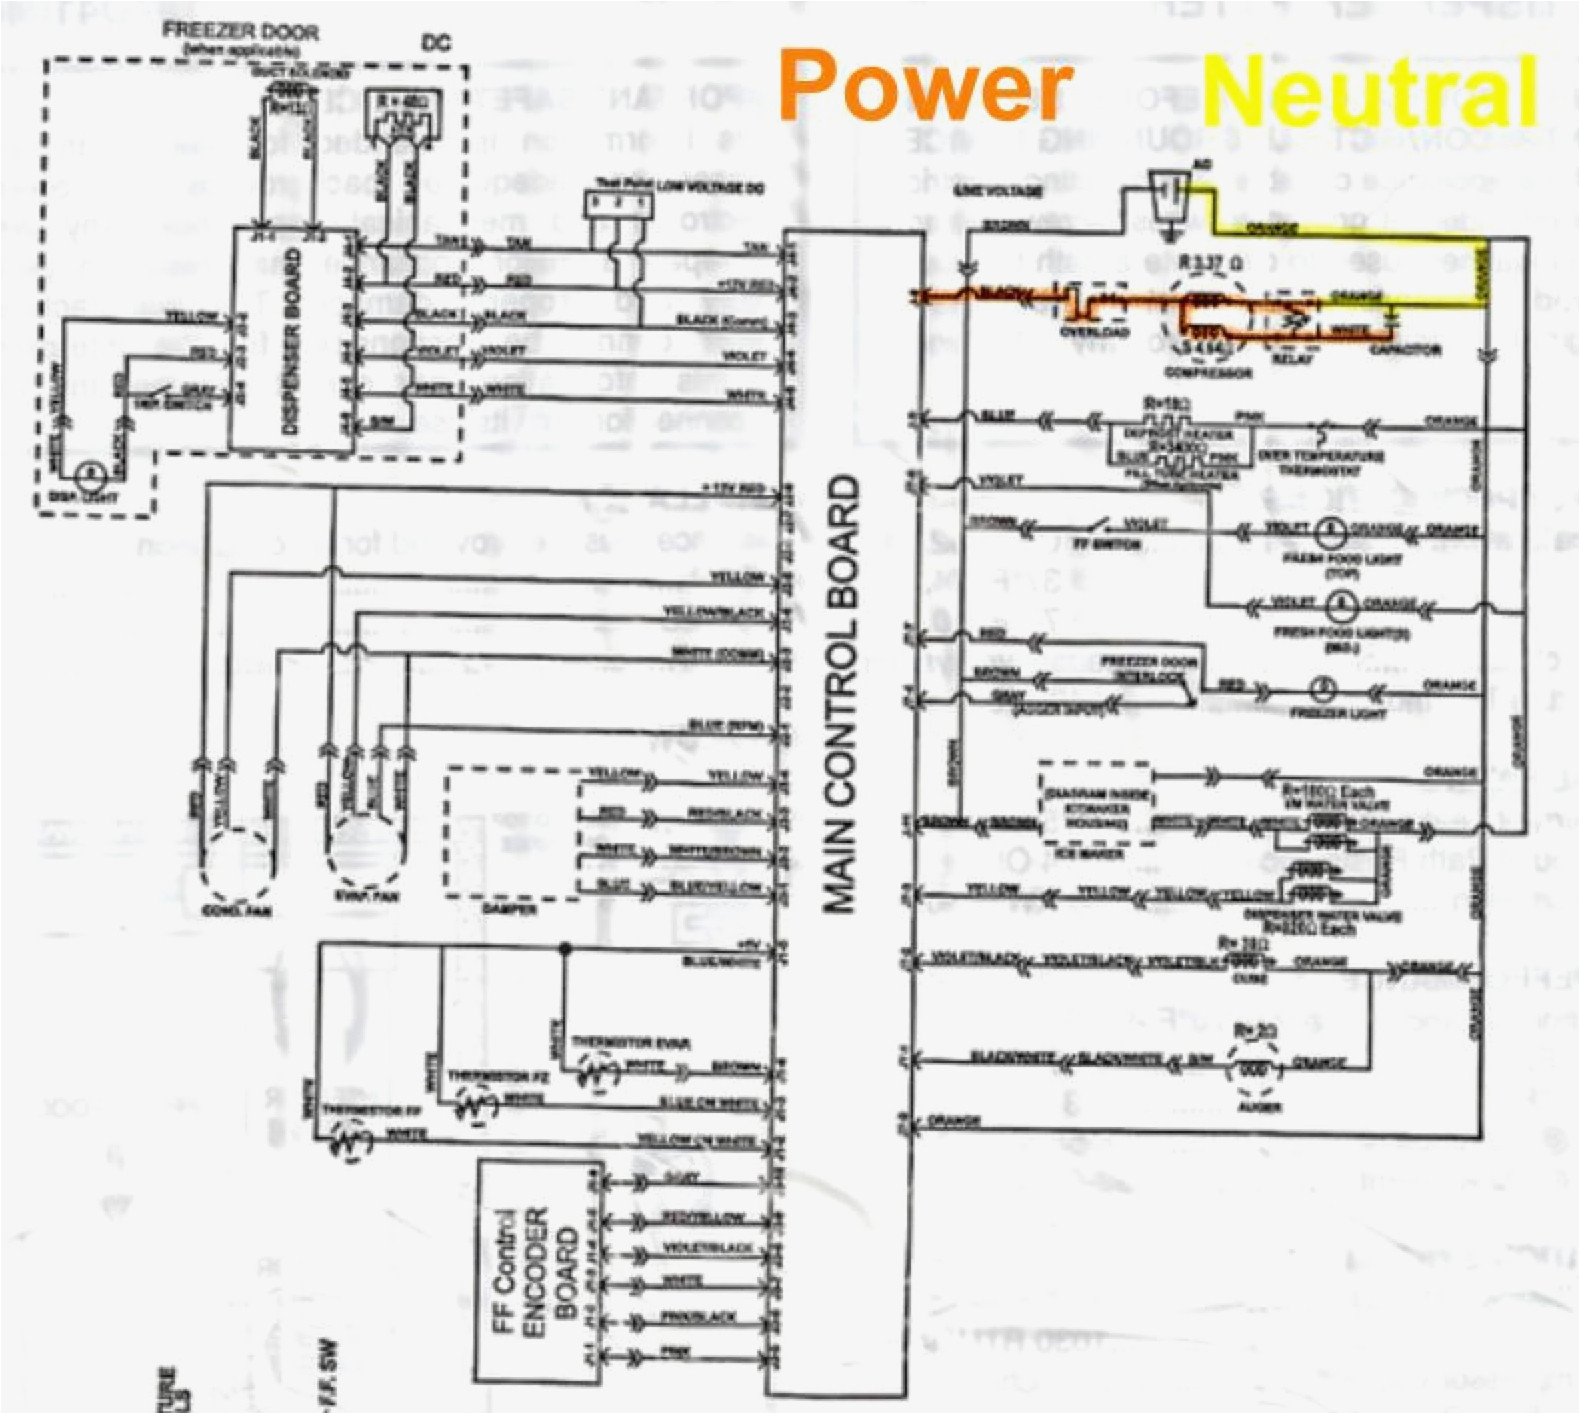 bohn evaporator wiring diagram elegant heatcraft walk in cooler wiring diagram free downloads walk in jpg